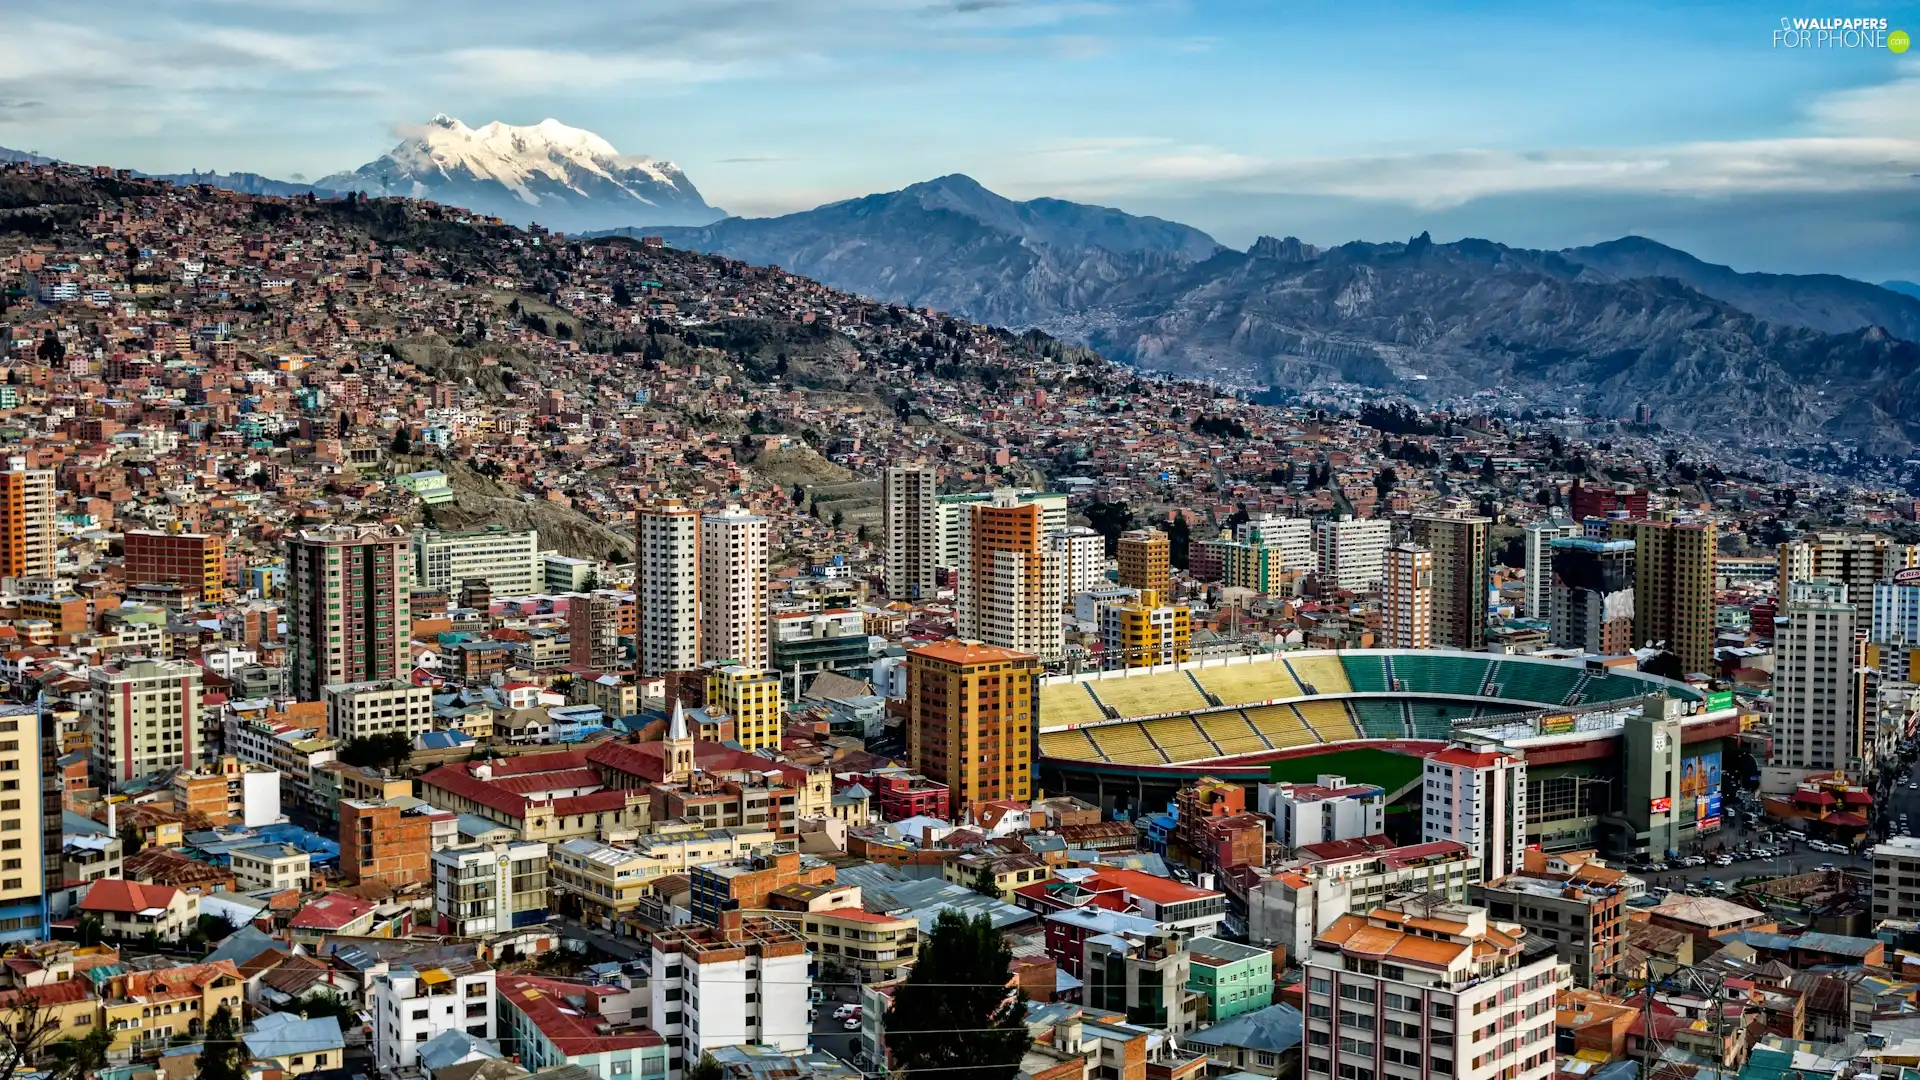 Town, Bolivia, La Paz